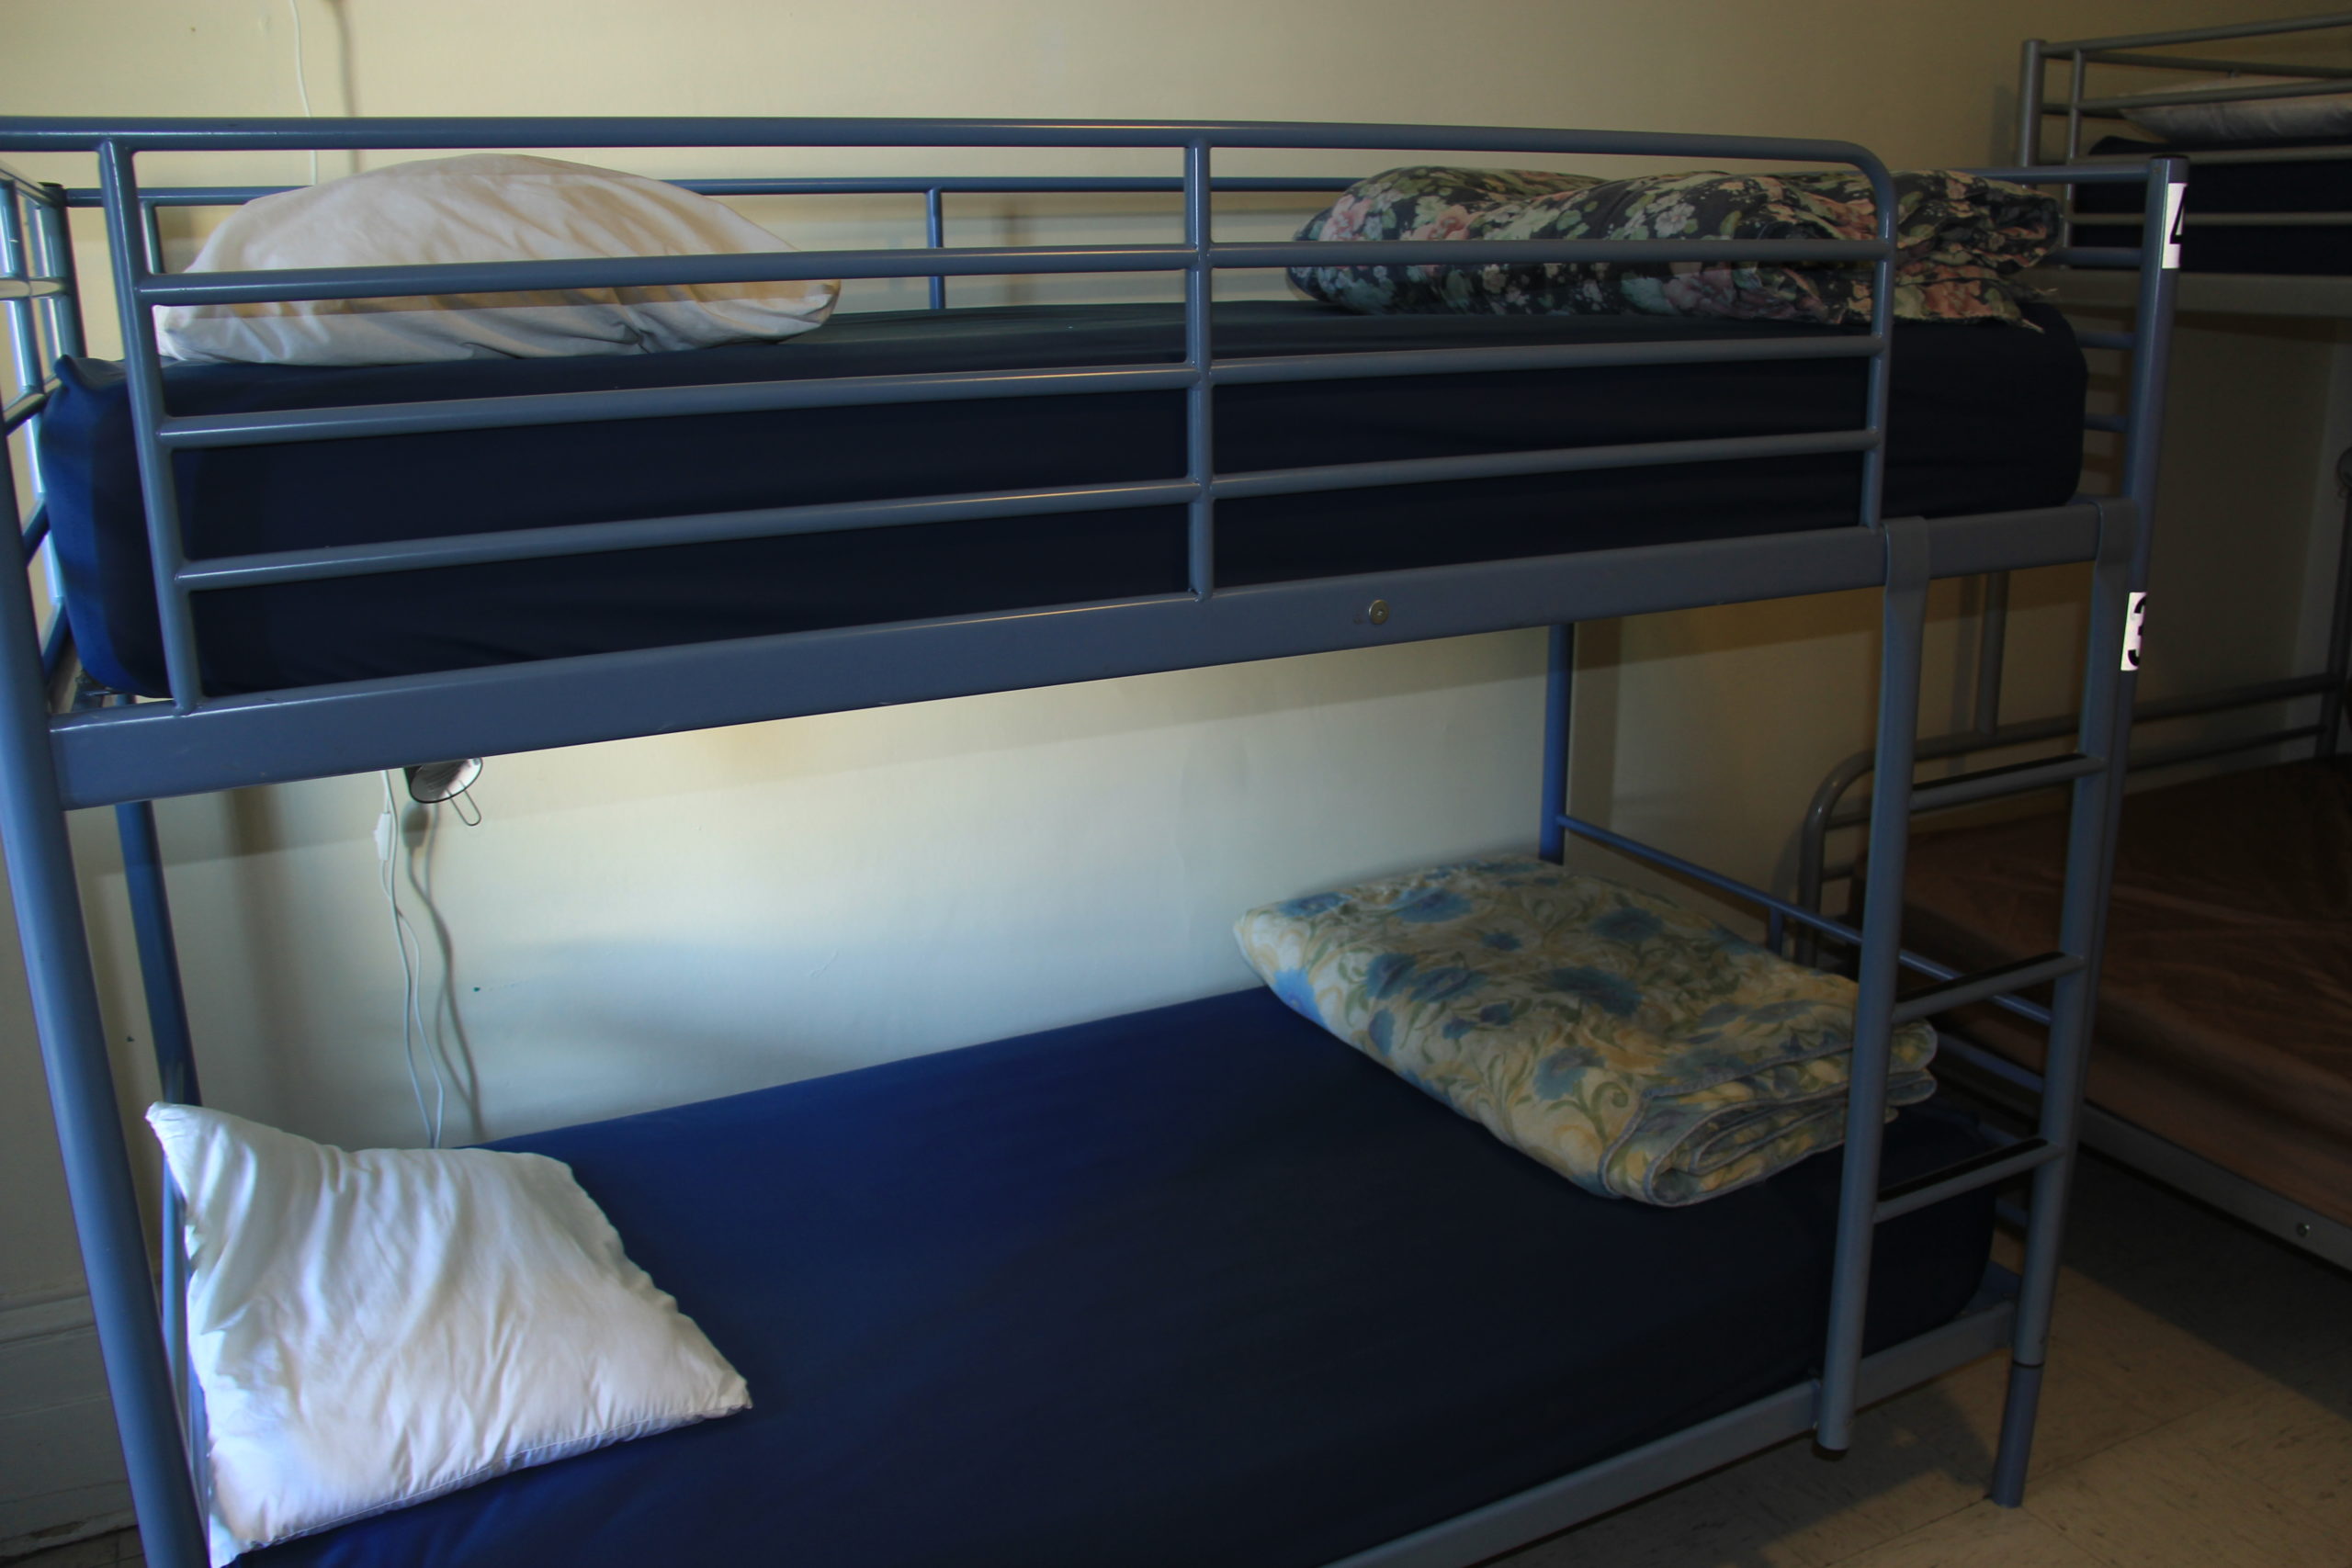 hostel beds canada